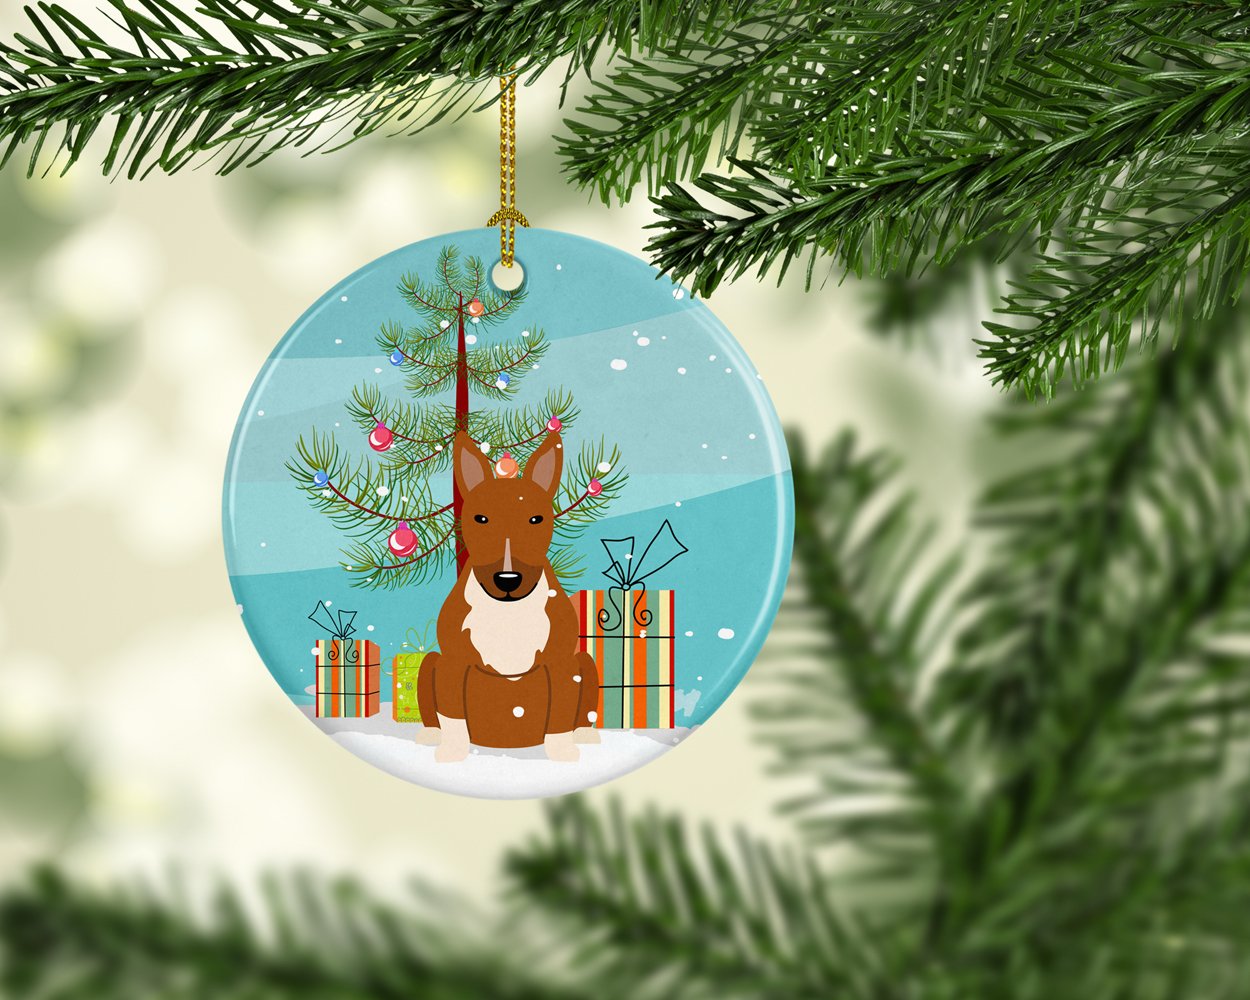 Merry Christmas Tree Bull Terrier Red Ceramic Ornament BB4259CO1 by Caroline's Treasures